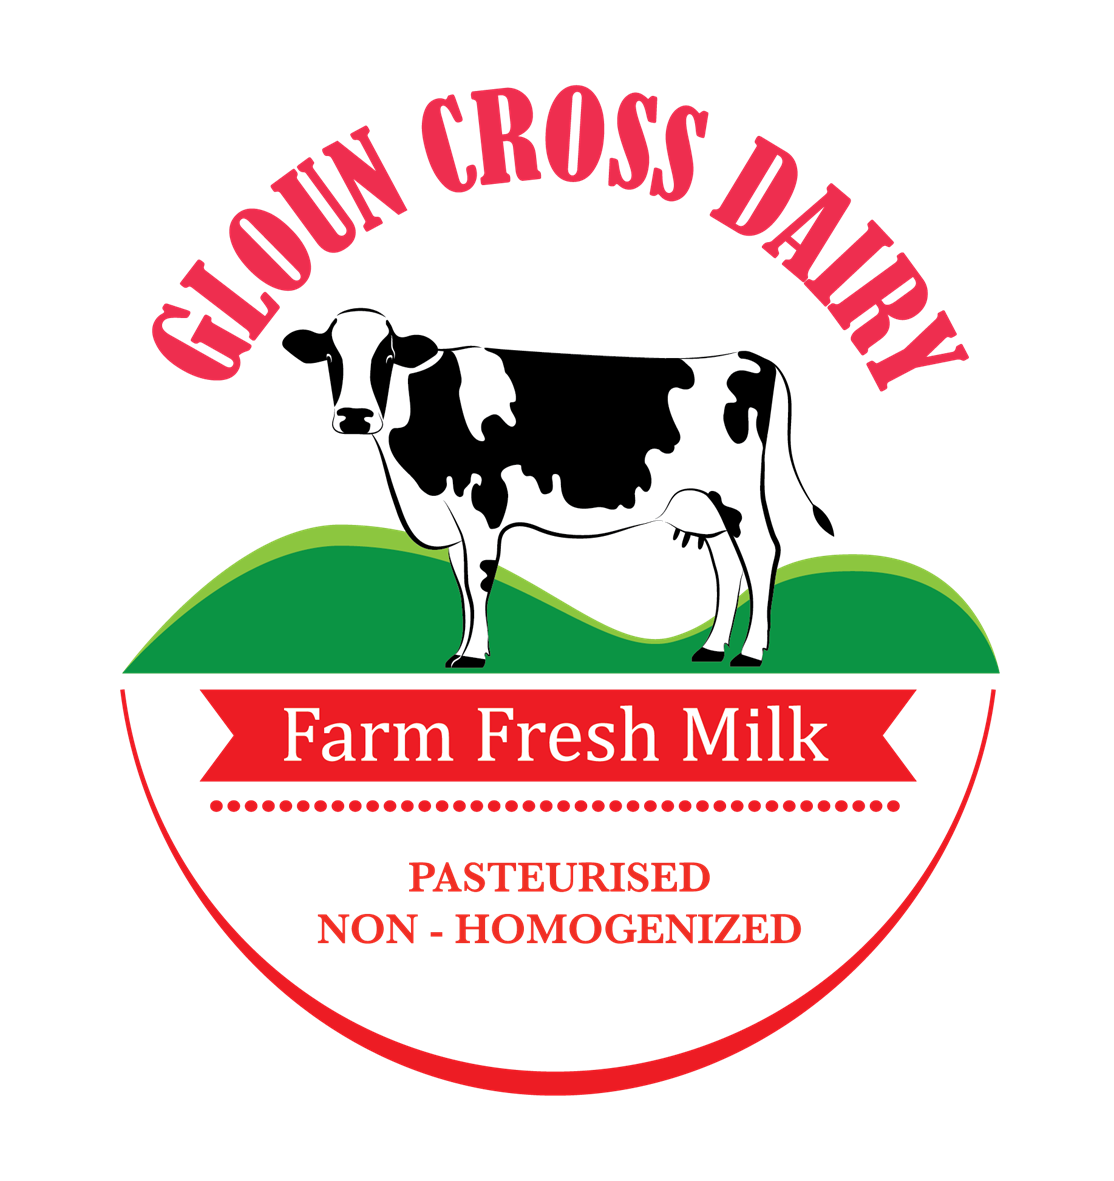 Gloun Cross Dairy